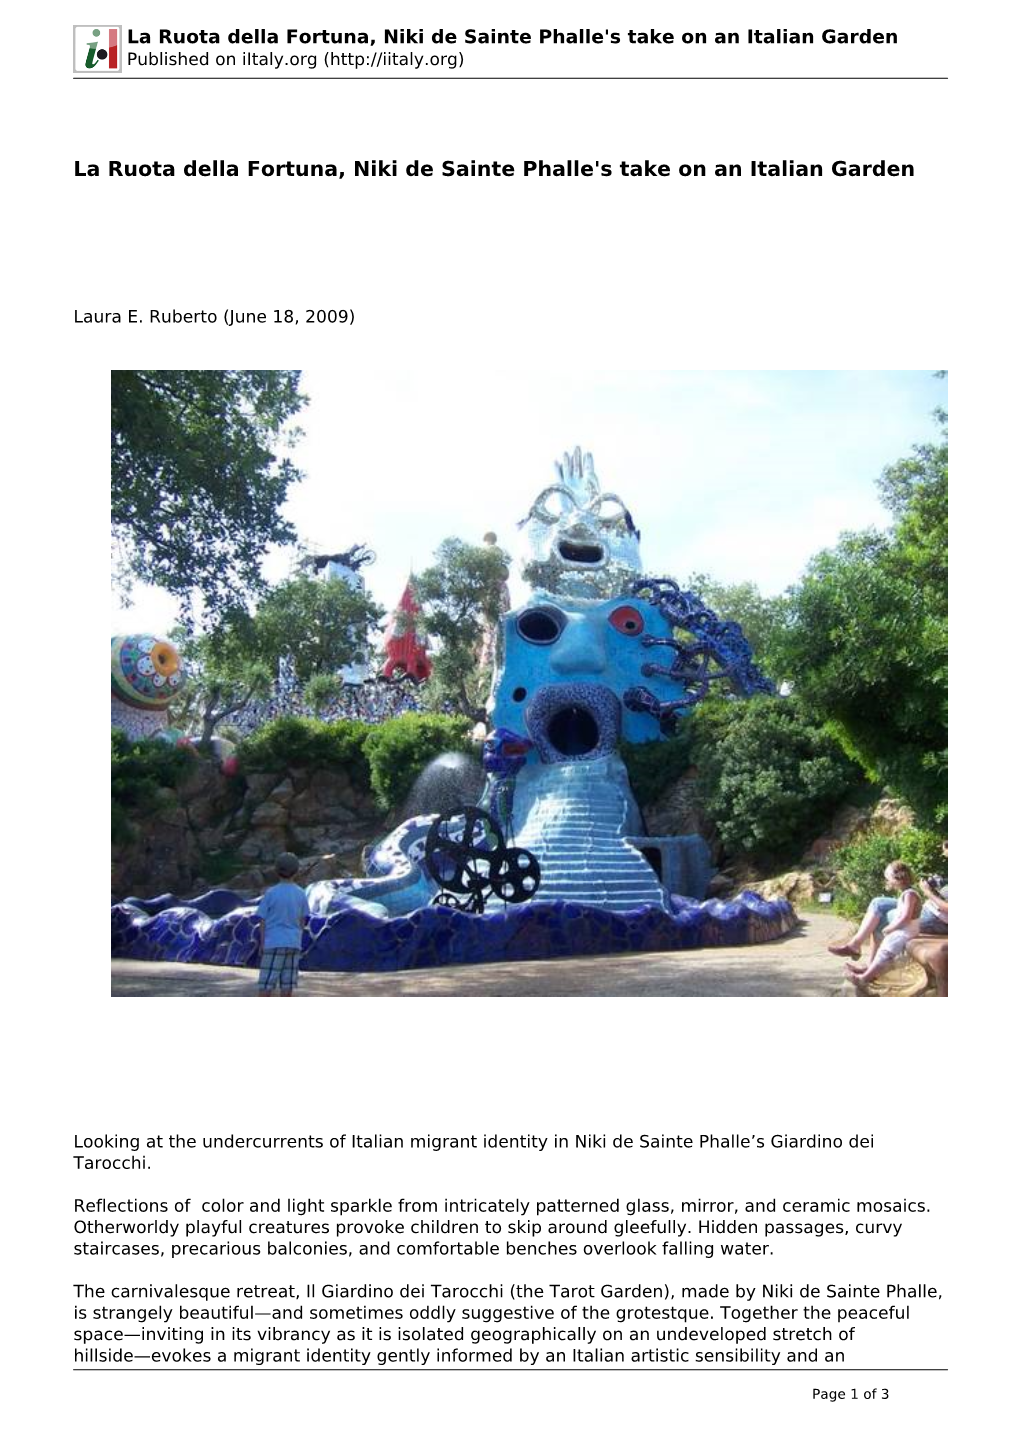 La Ruota Della Fortuna, Niki De Sainte Phalle's Take on an Italian Garden Published on Iitaly.Org (